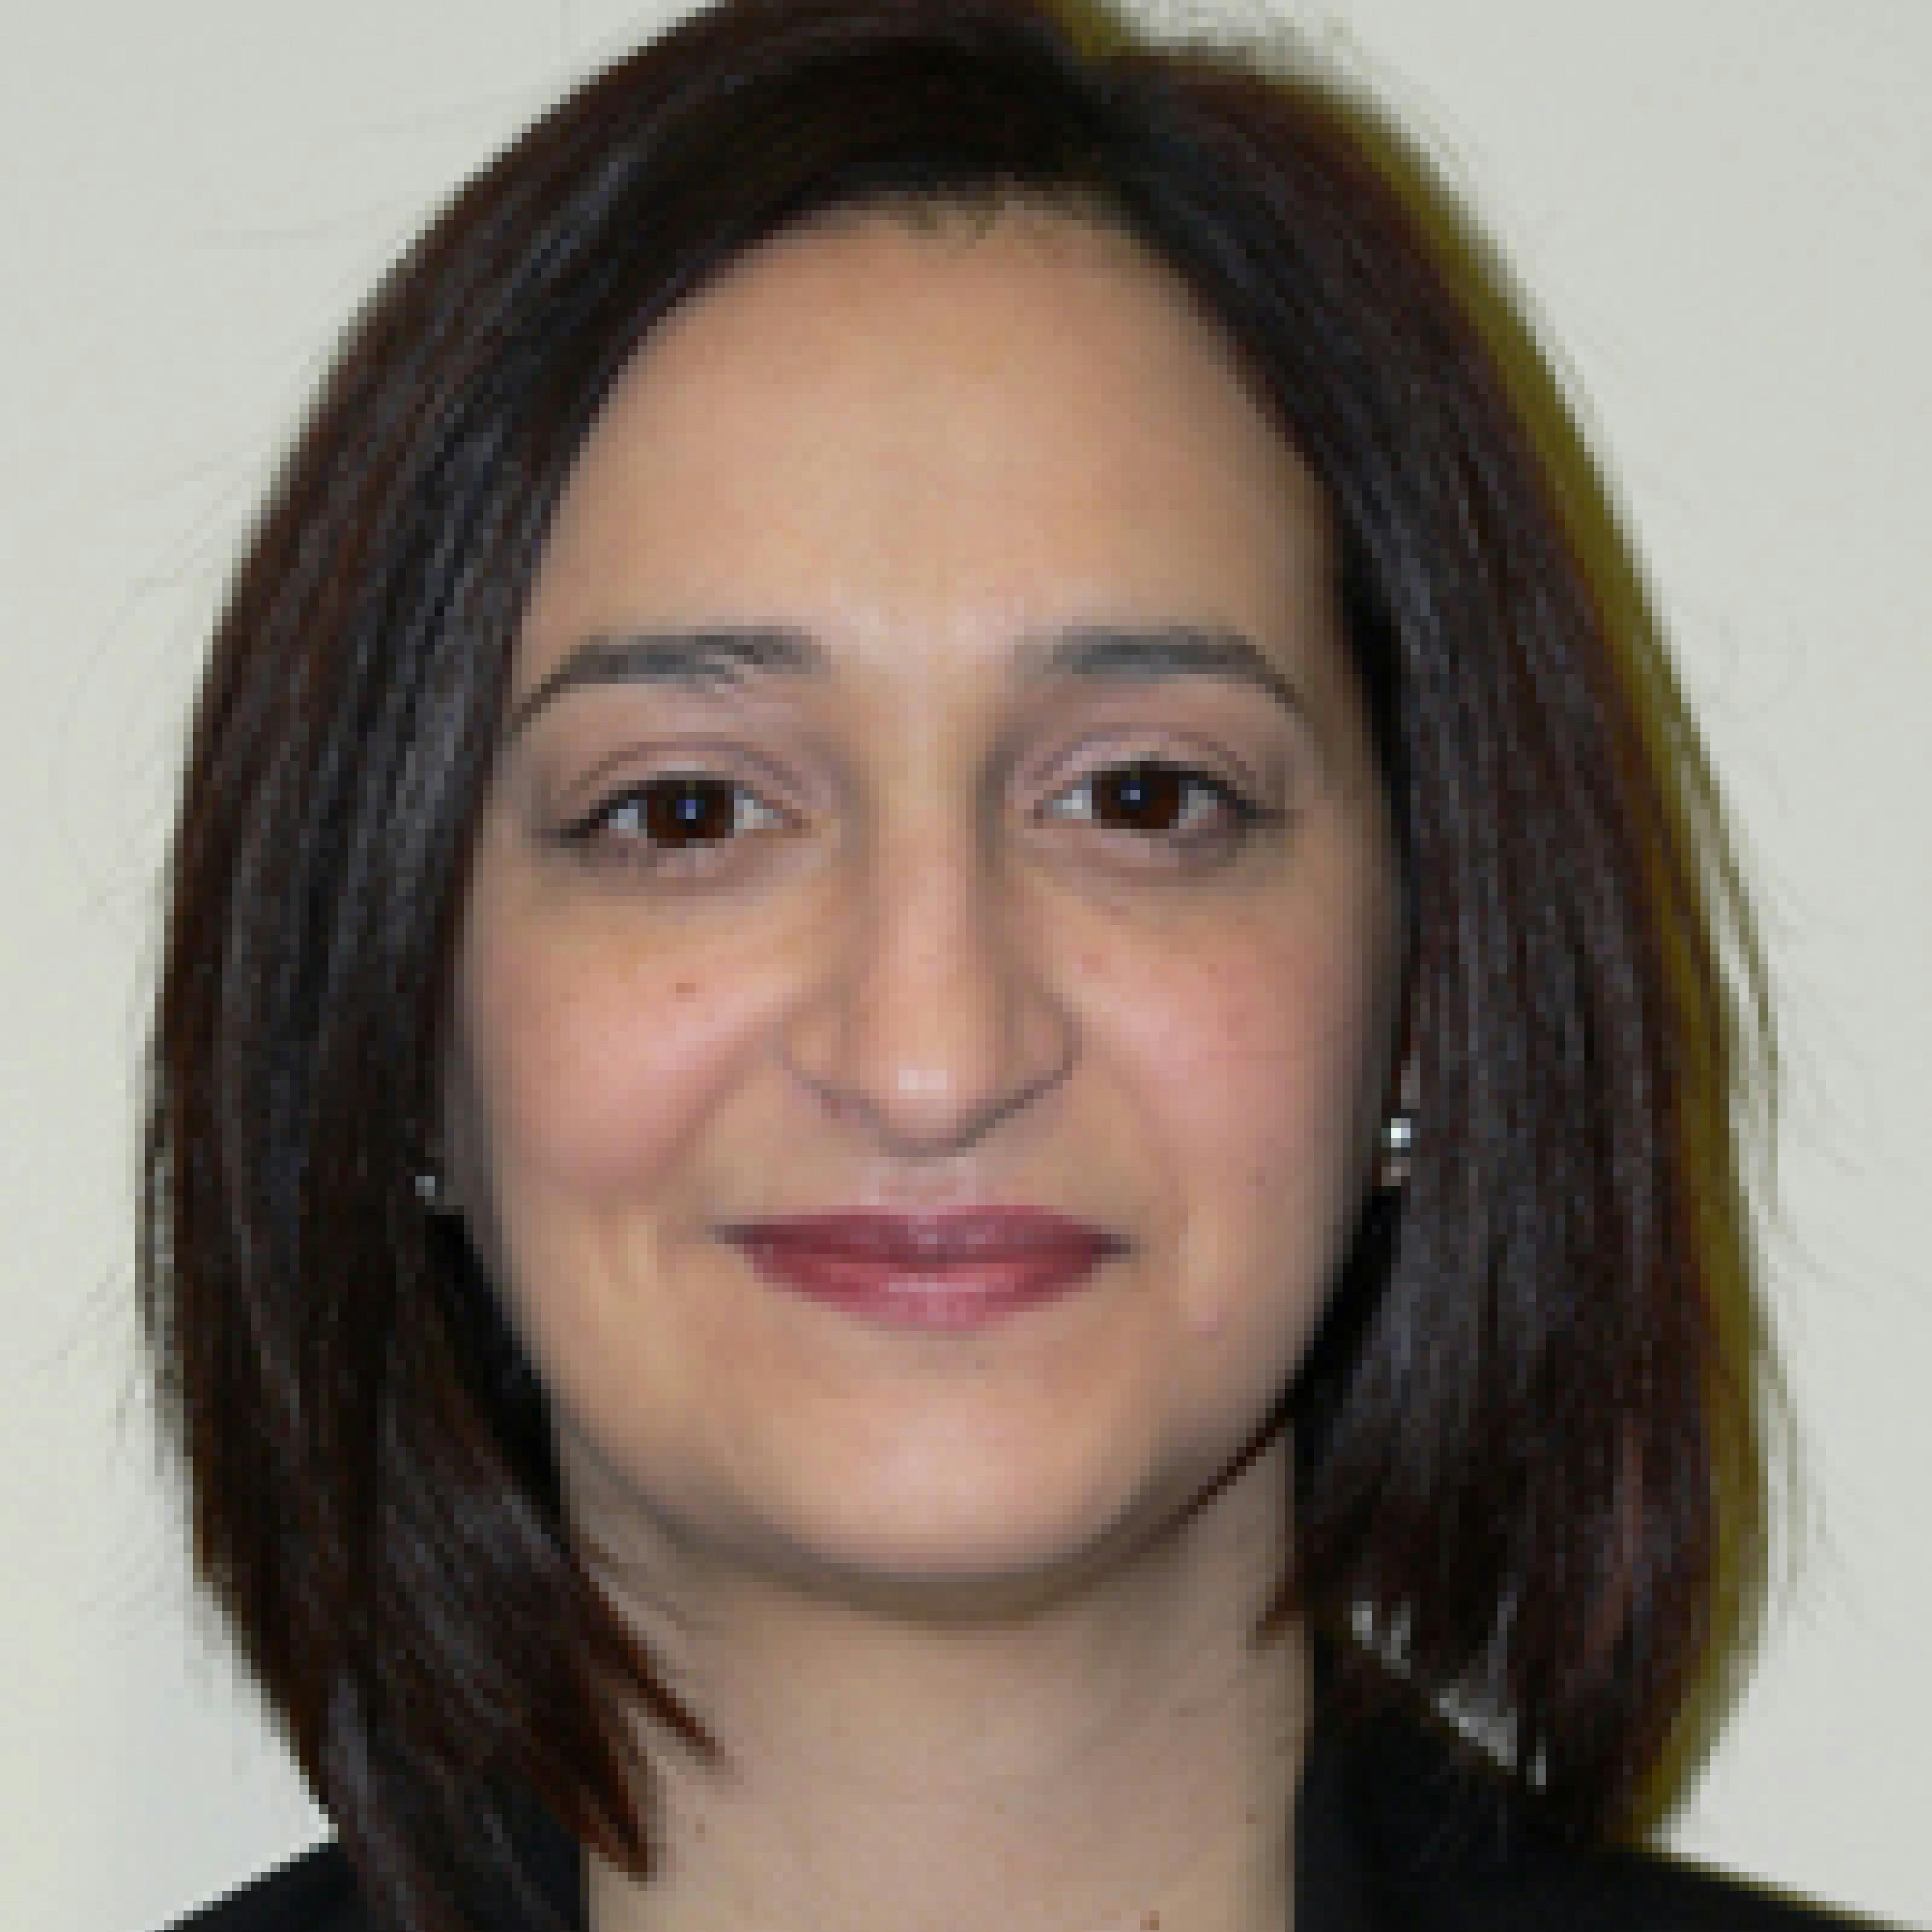 Team member, Adele Nazzari